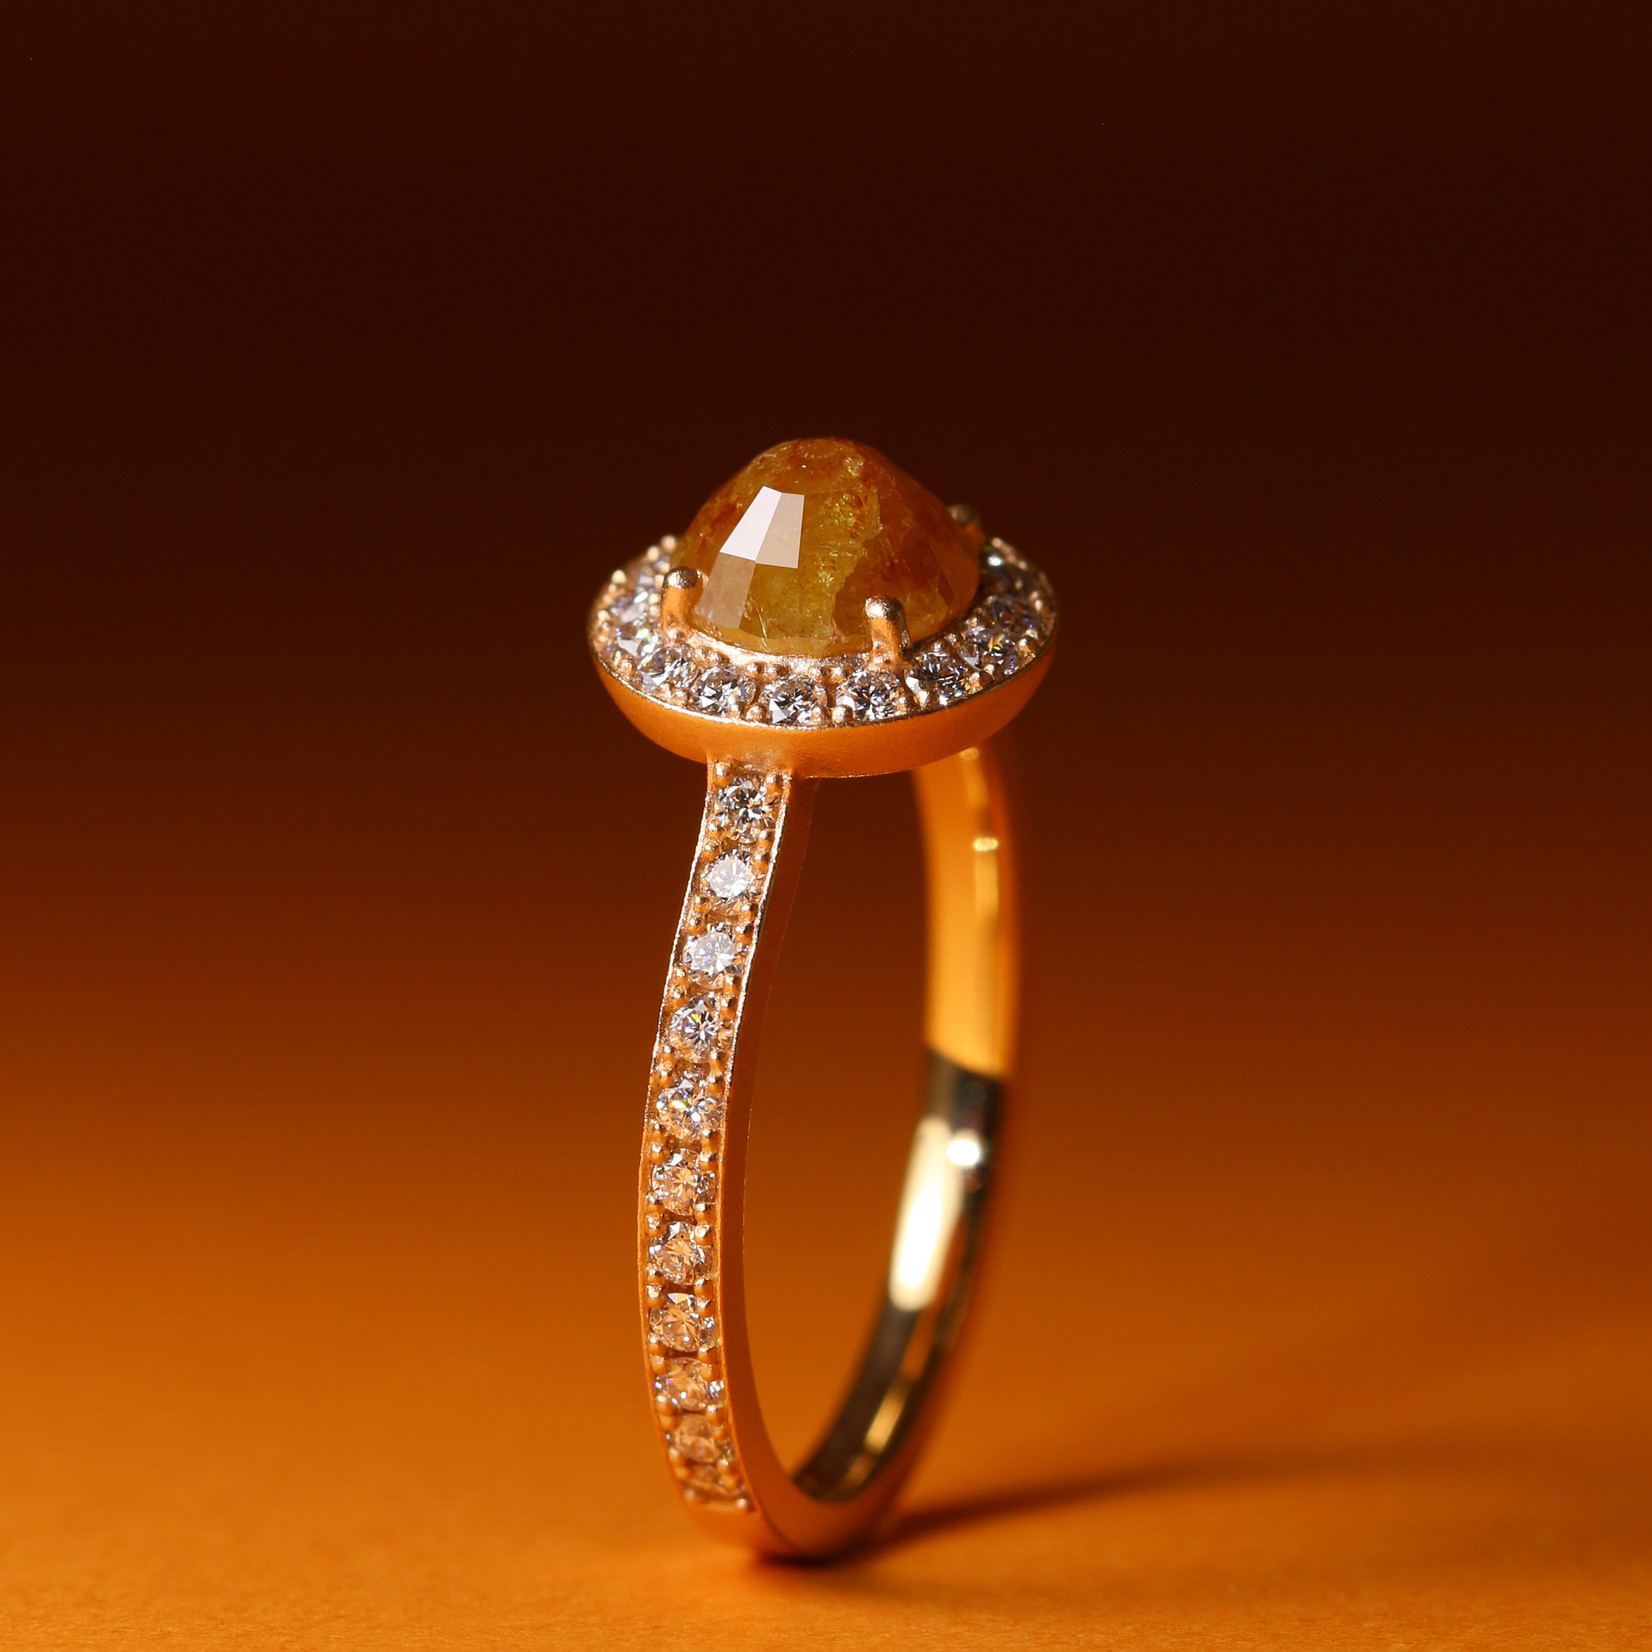 Baxter Moerman Amelia Ring with Tangerine Rose Cut Diamond